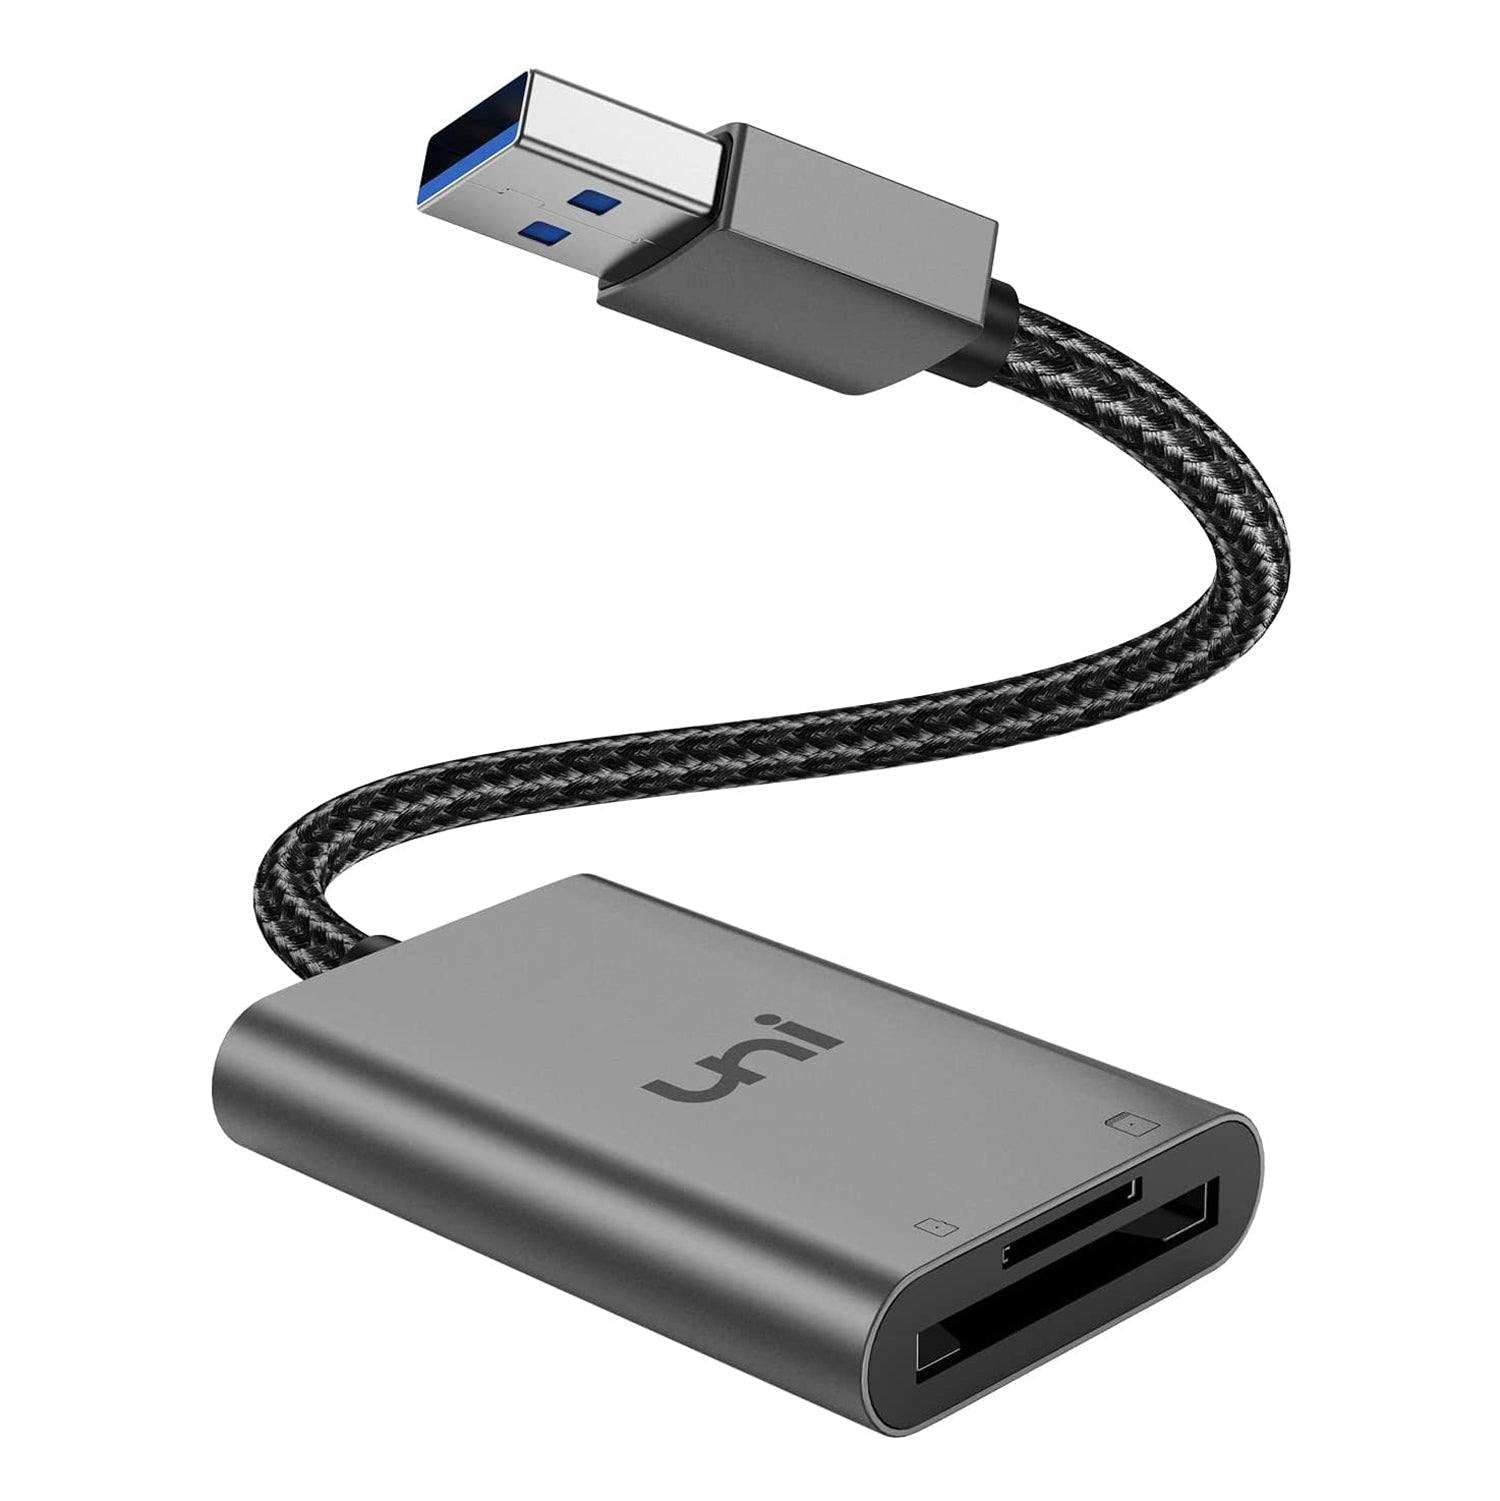 SD Card & micro SD Card Box with USB Stick Holder by Findusdwarf